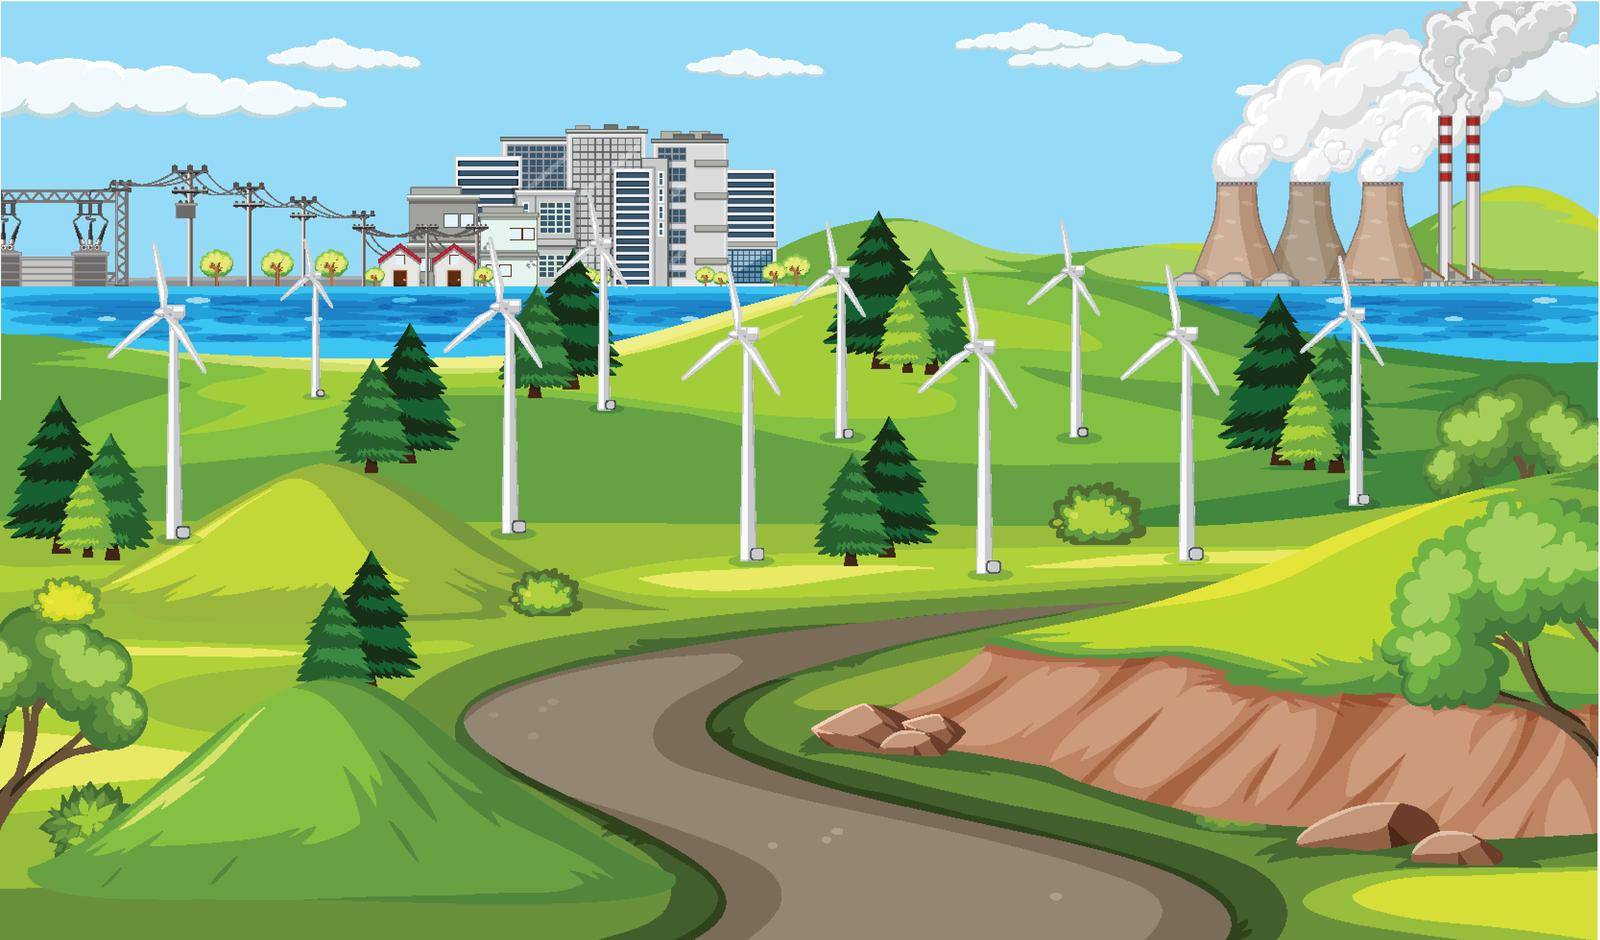 Wind turbine and long road scene illustration